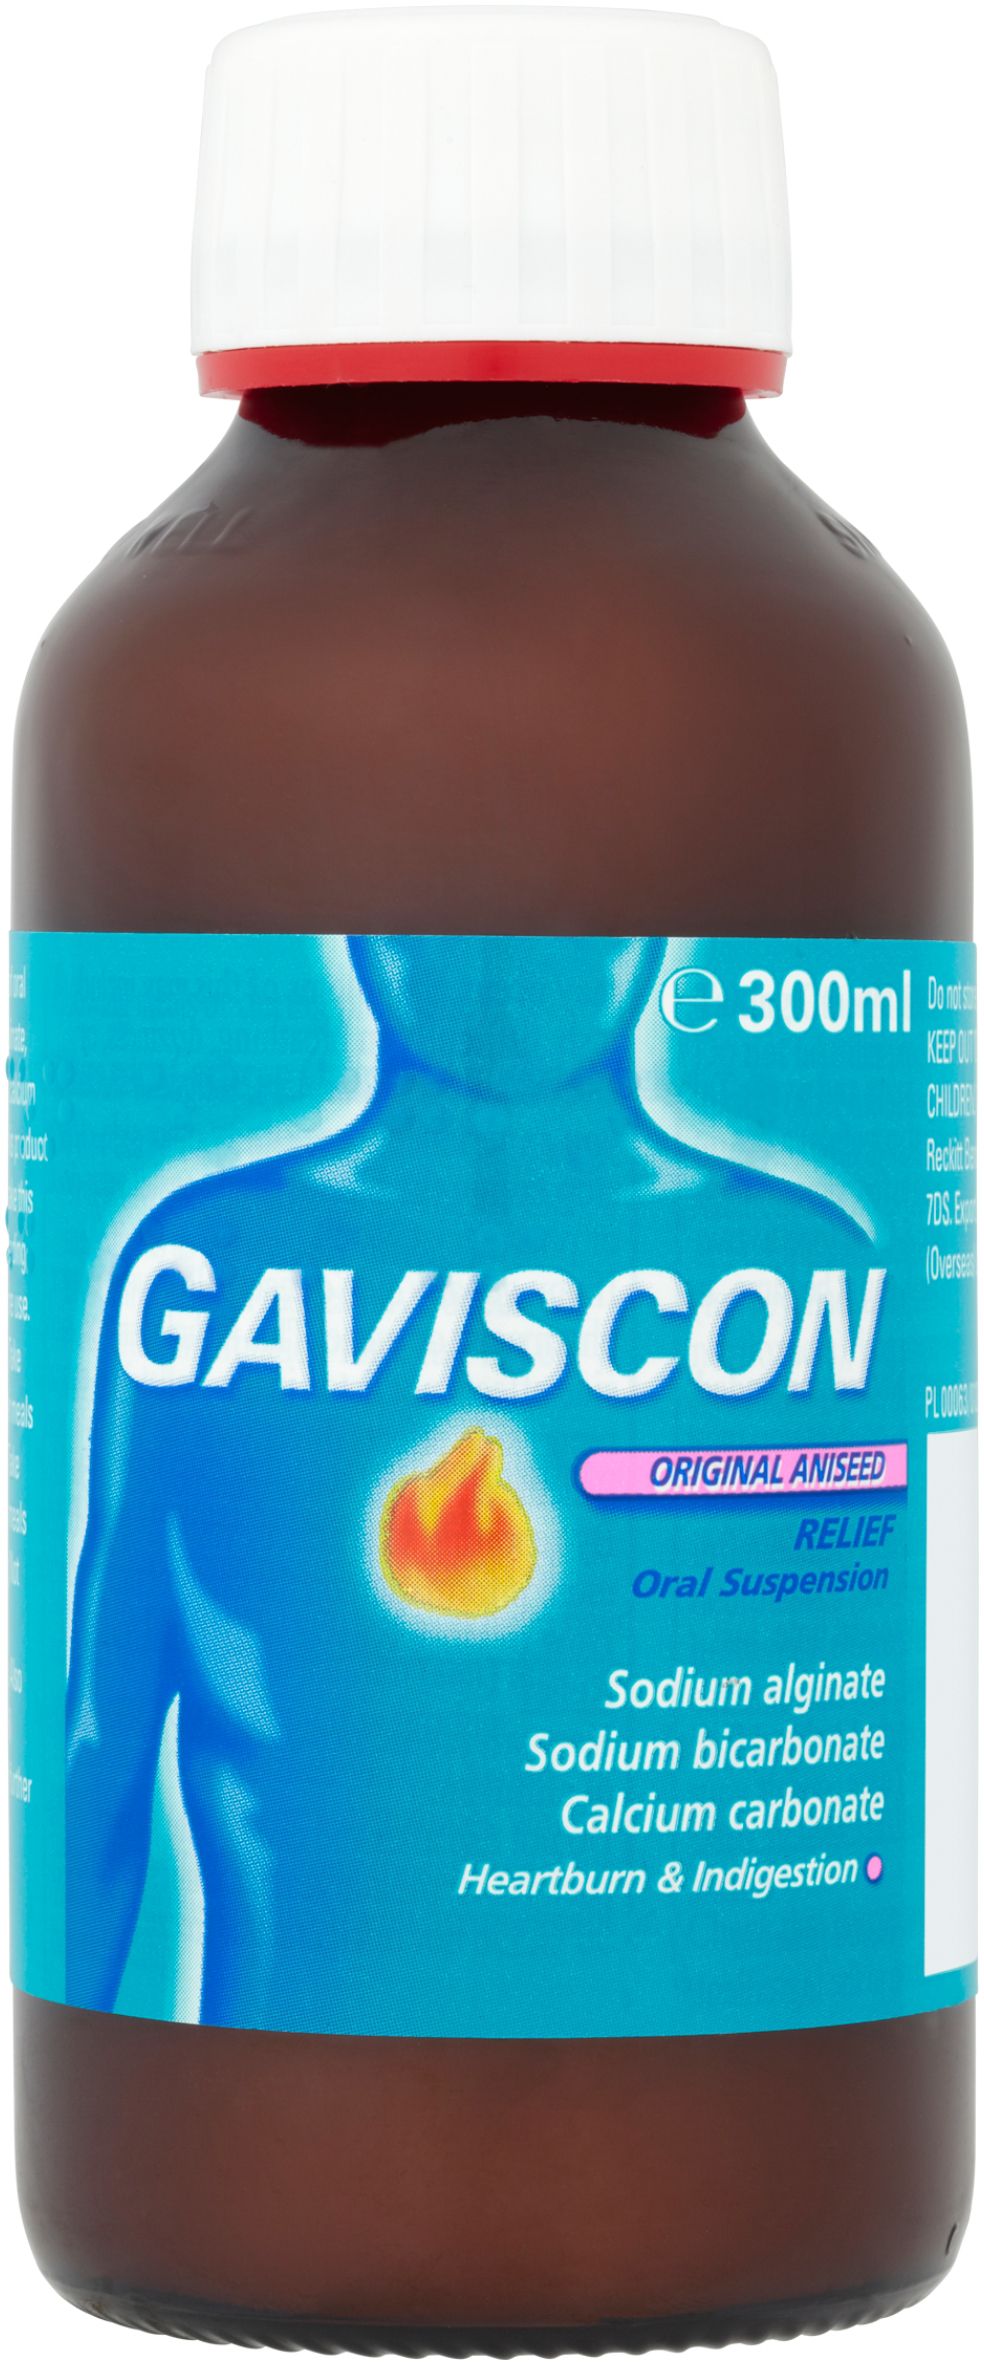 gaviscon liquid price